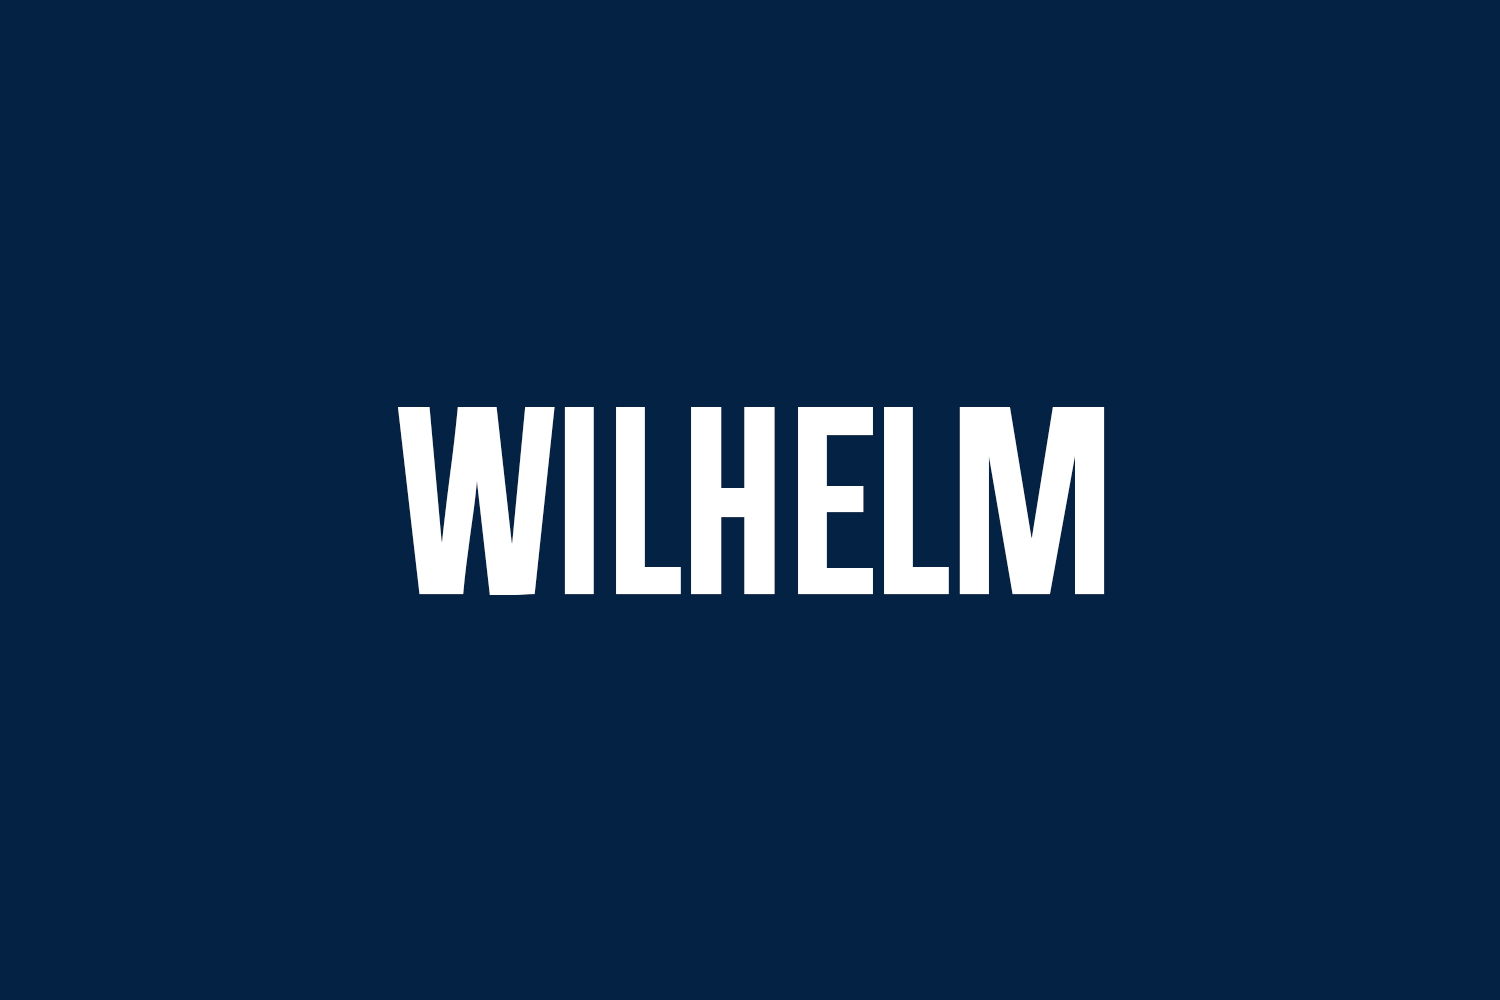 Wilhelm Free Font